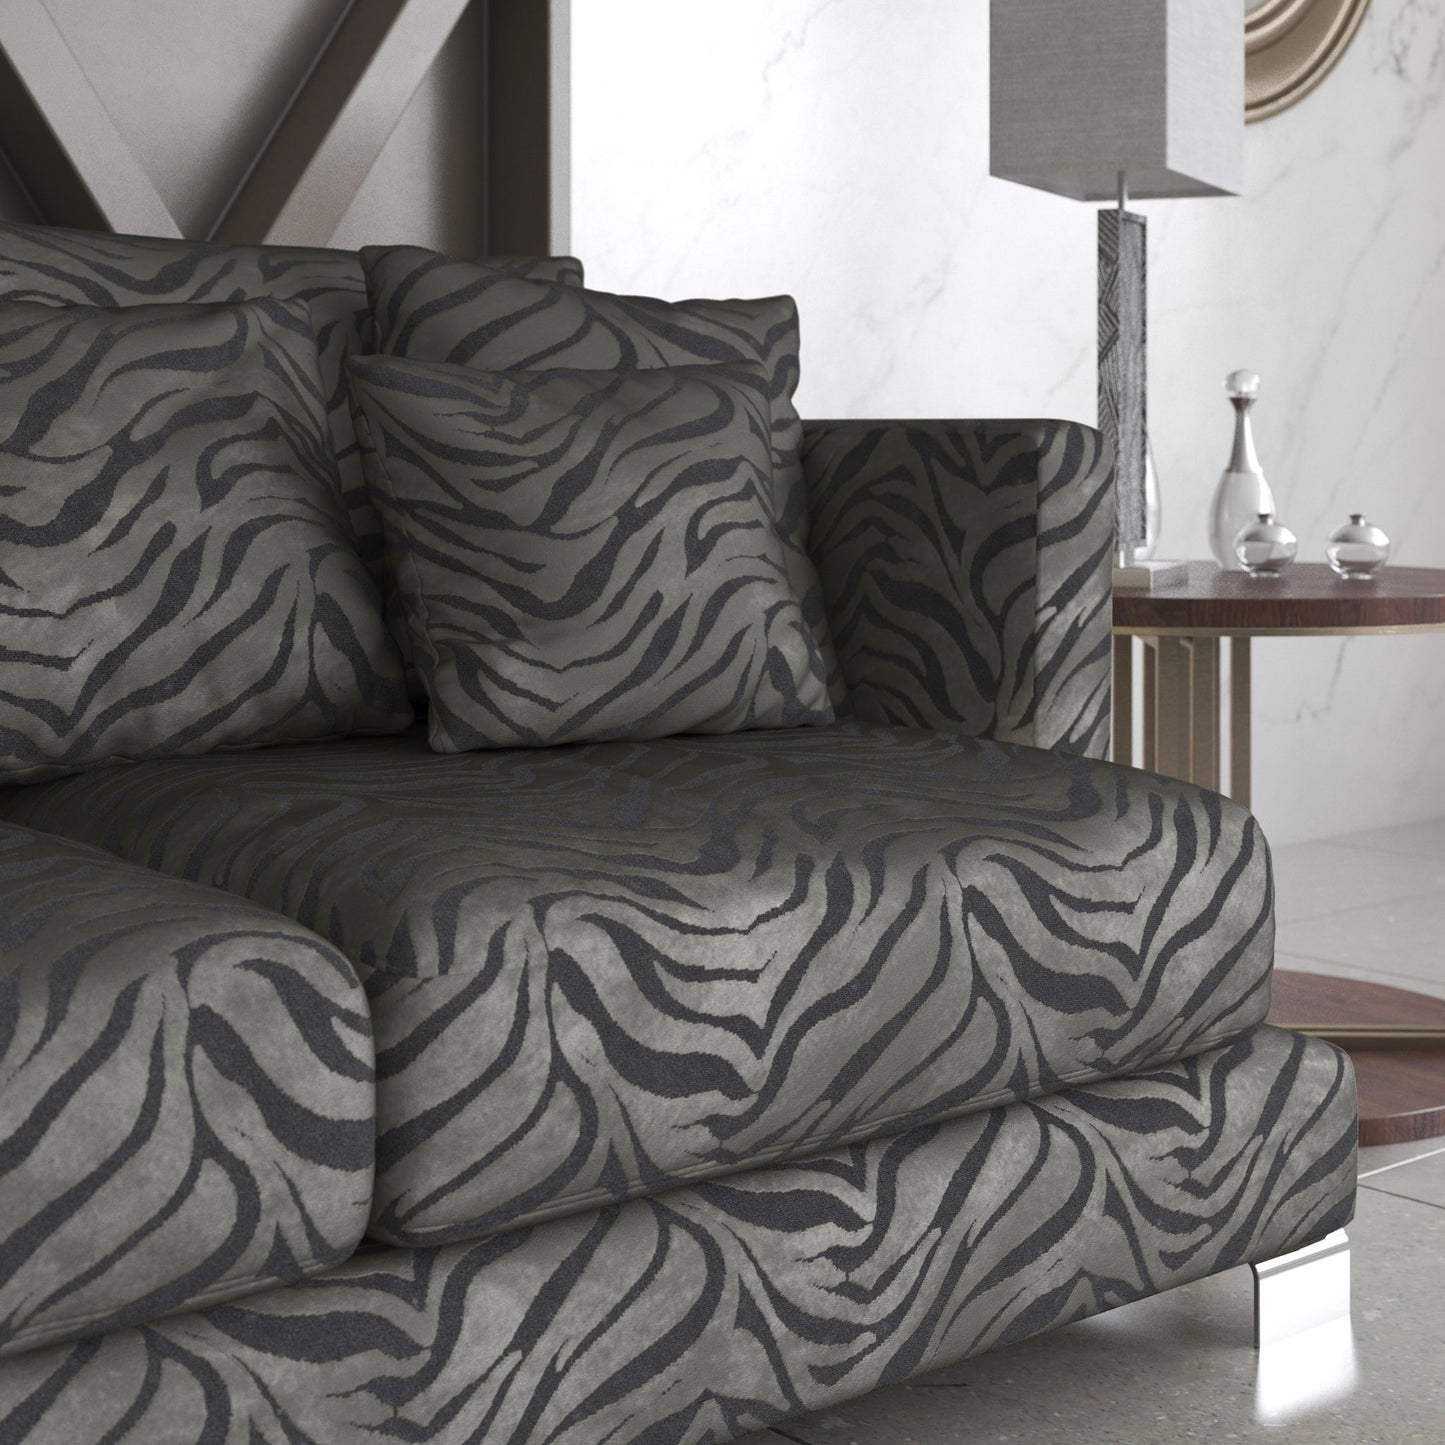 Sauvage cebra (zebra) print fabric from Warwick Fabrics